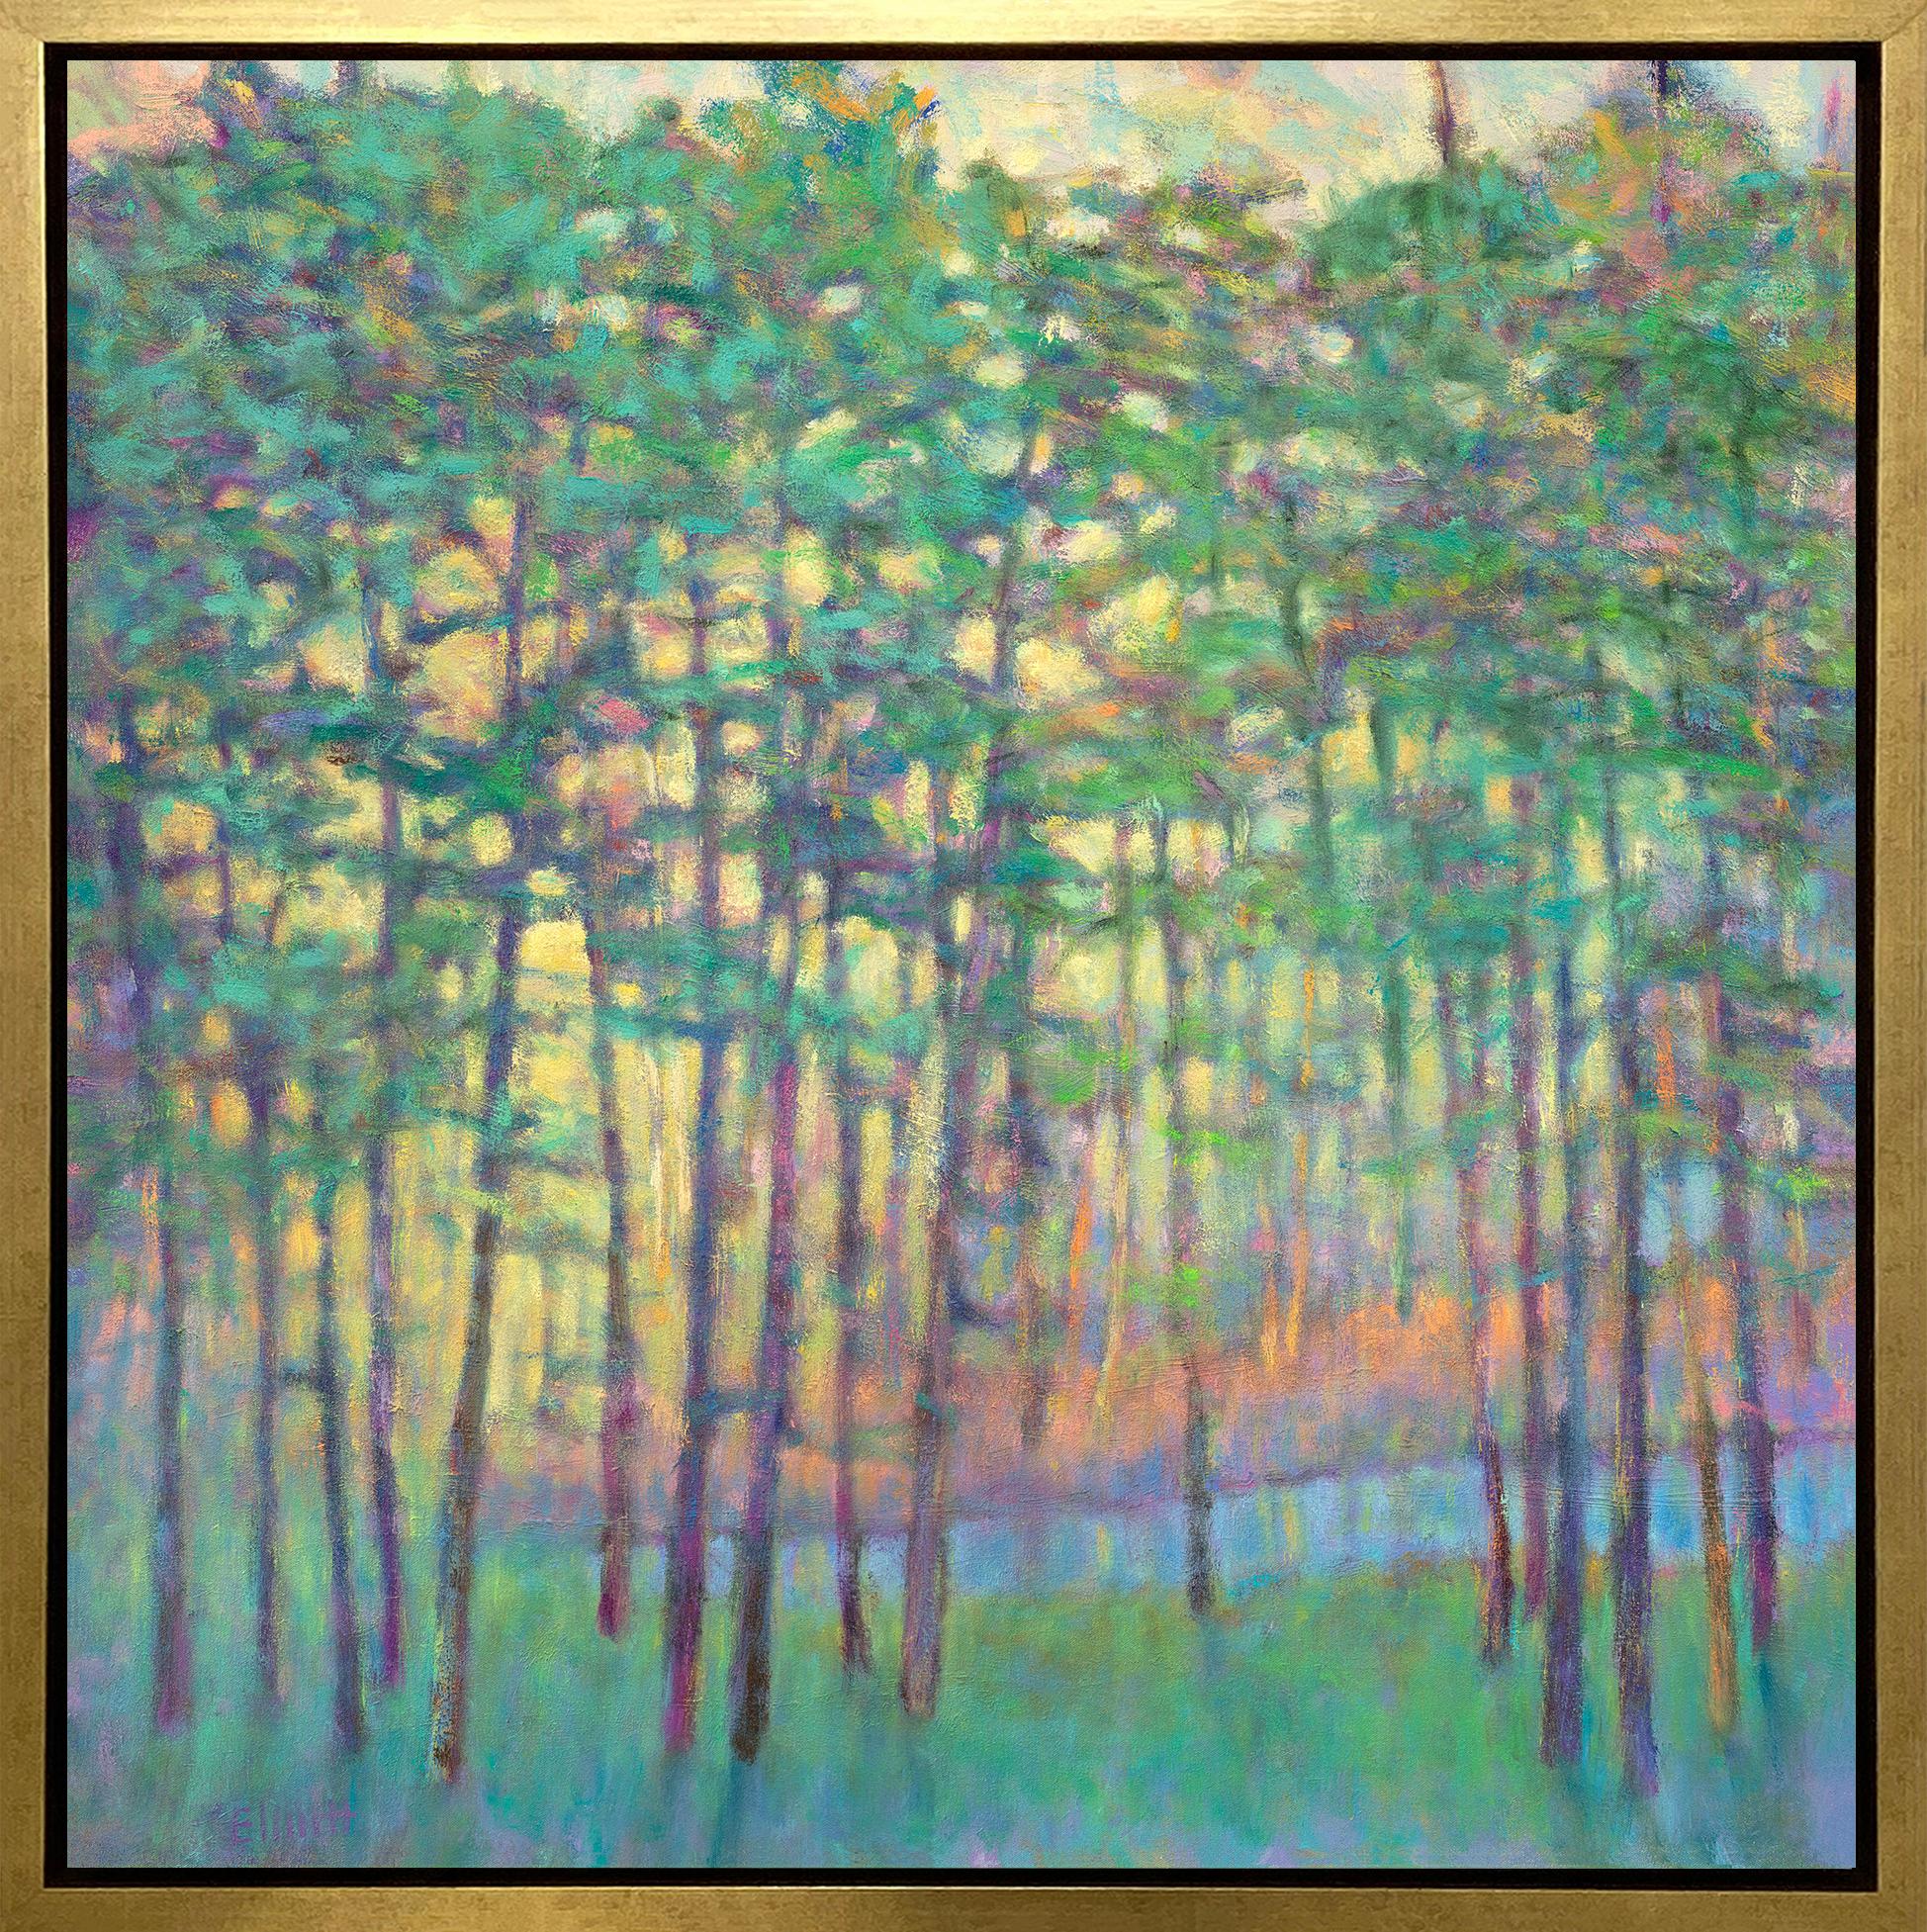 Ken Elliott Landscape Print - "Green Influences, " Framed Limited Edition Giclee Print, 30" x 30"